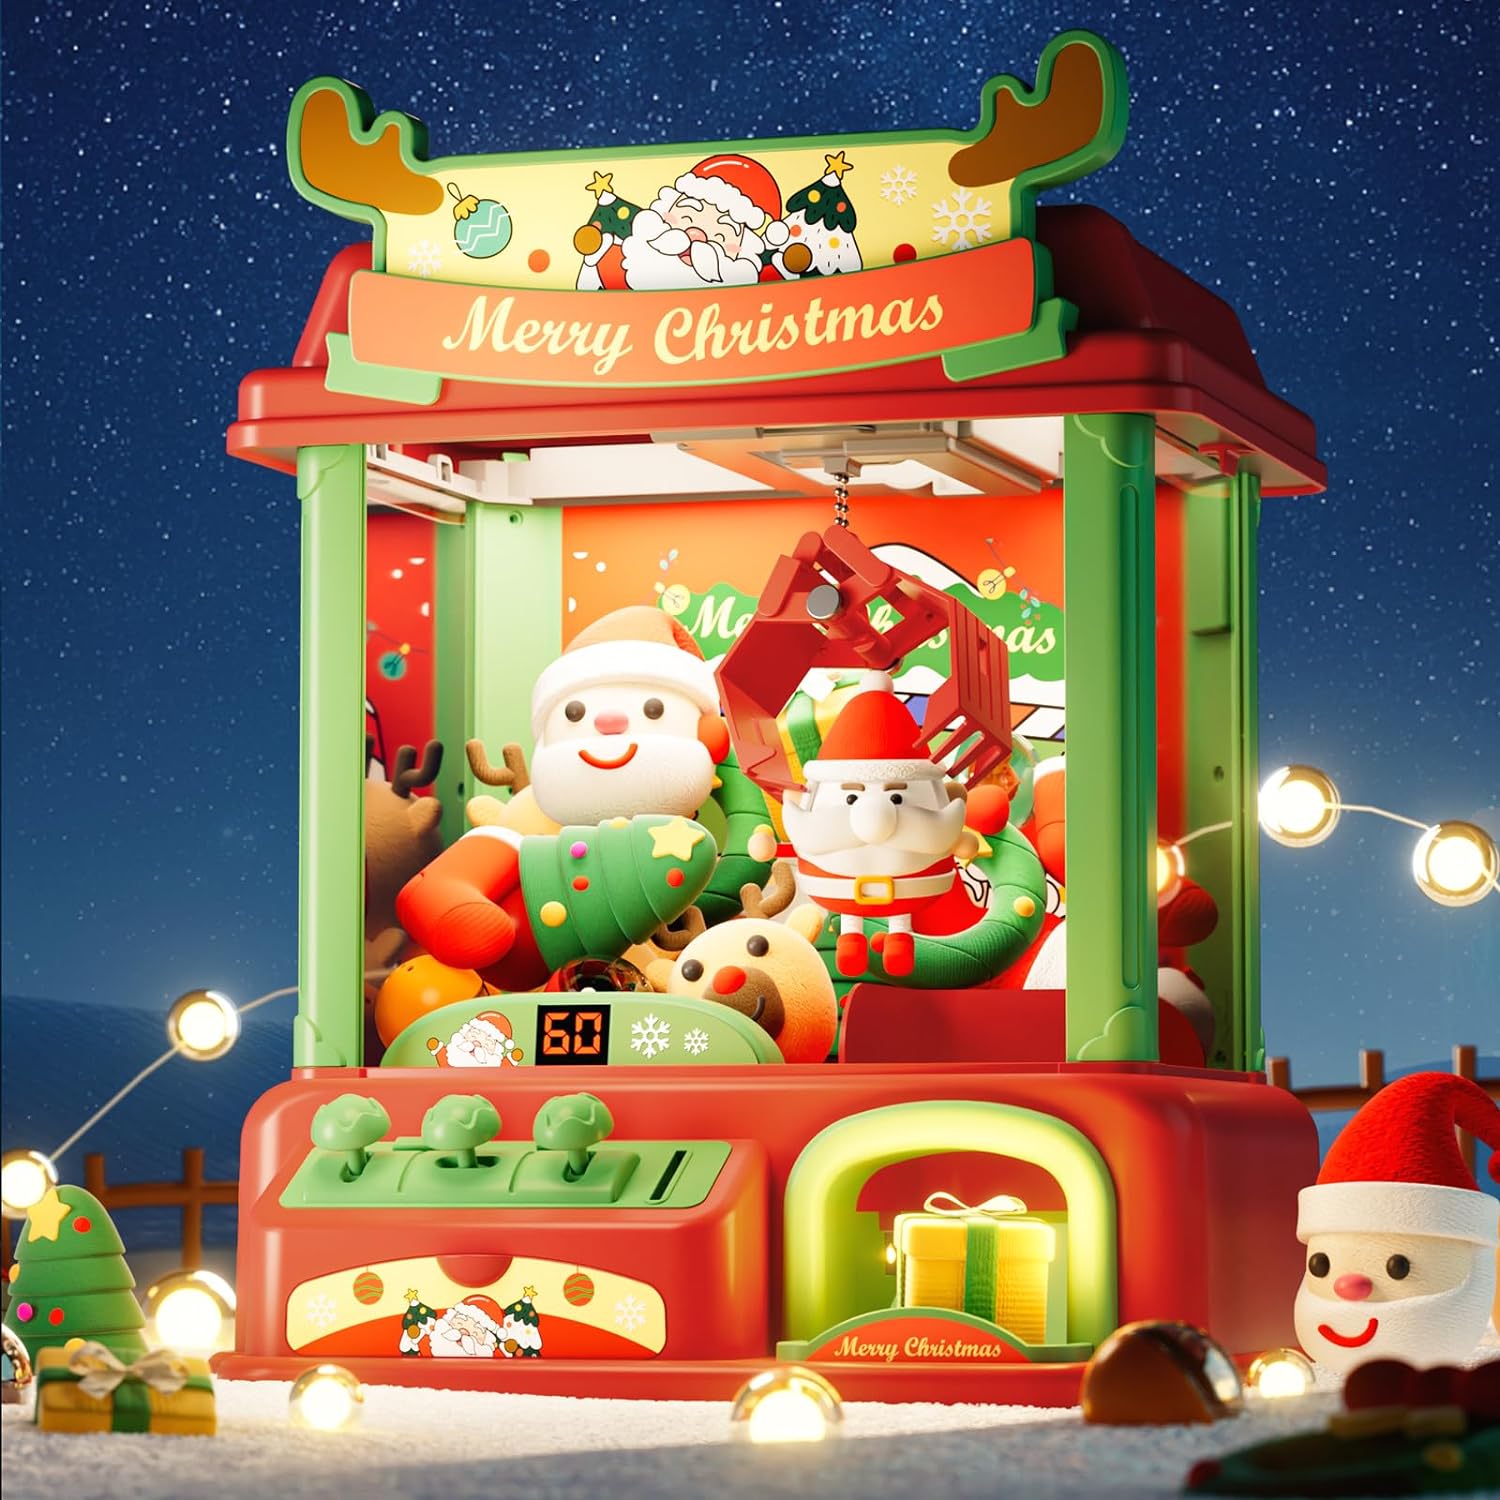 Candy Mini Claw Machine for Kids|Unicorn Toys Christmas Best Gifts Ideas - Cykapu